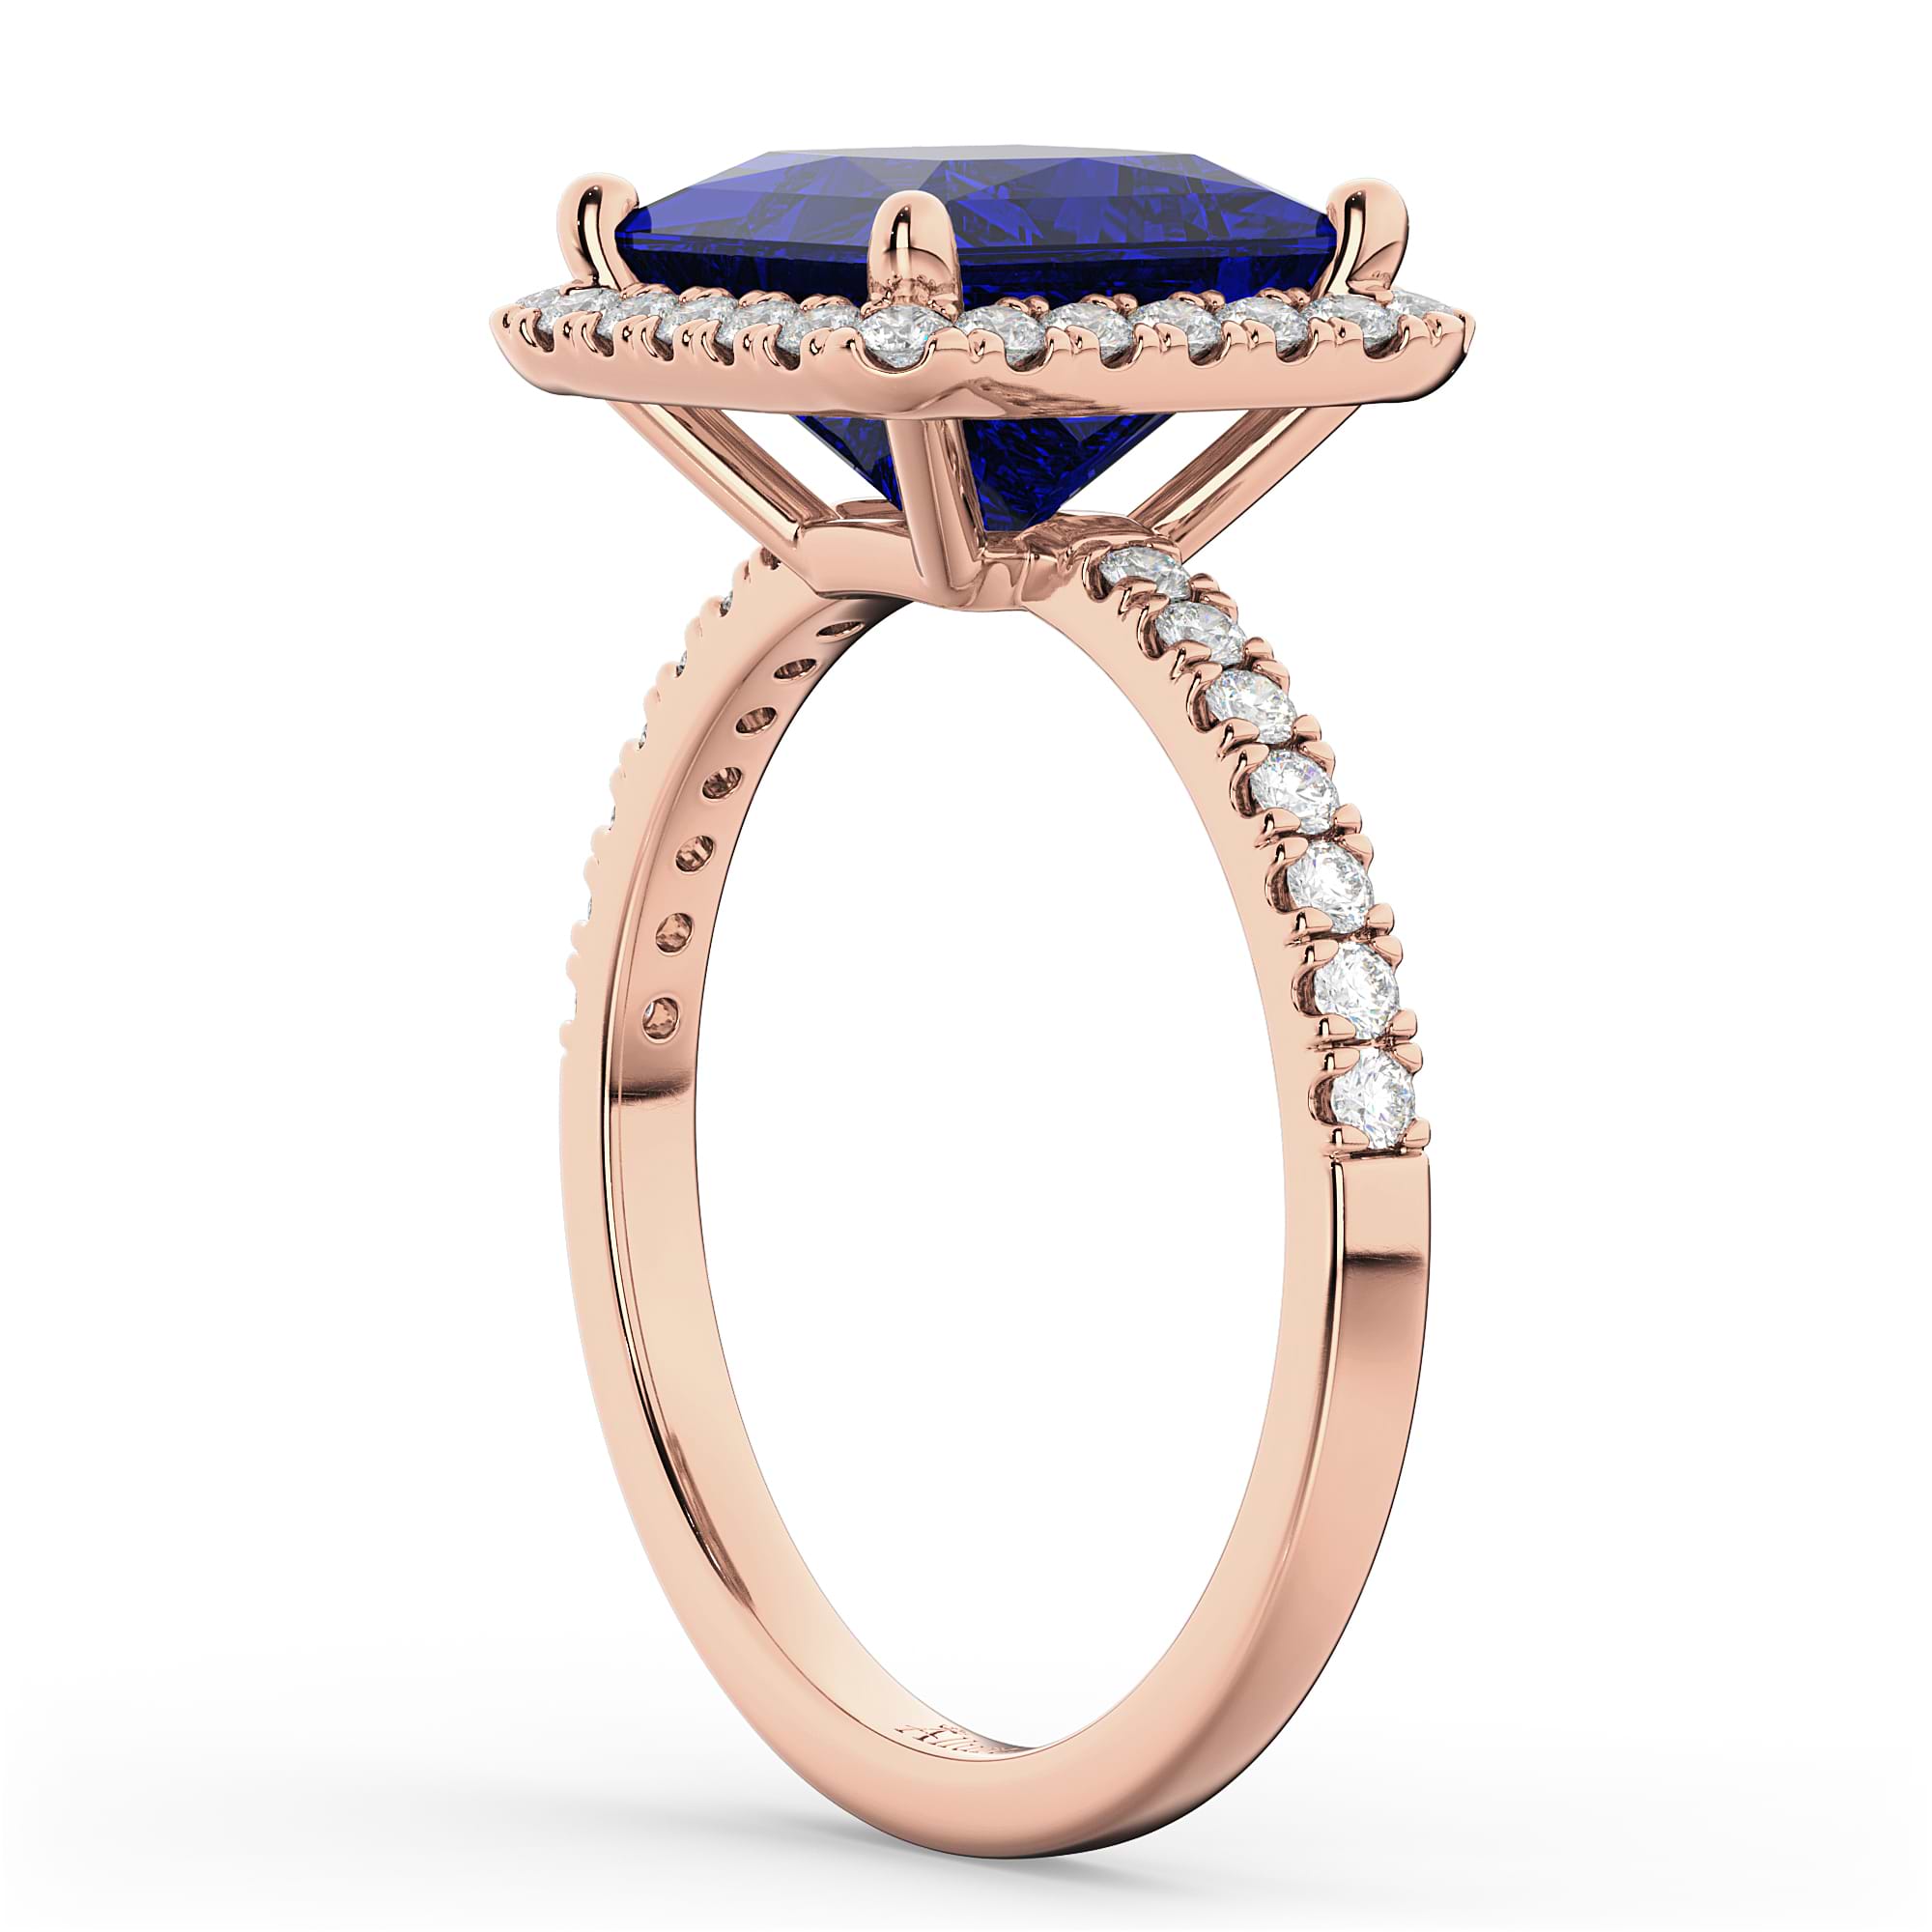 Princess Cut Halo Blue Sapphire & Diamond Engagement Ring 14K Rose Gold 3.47ct